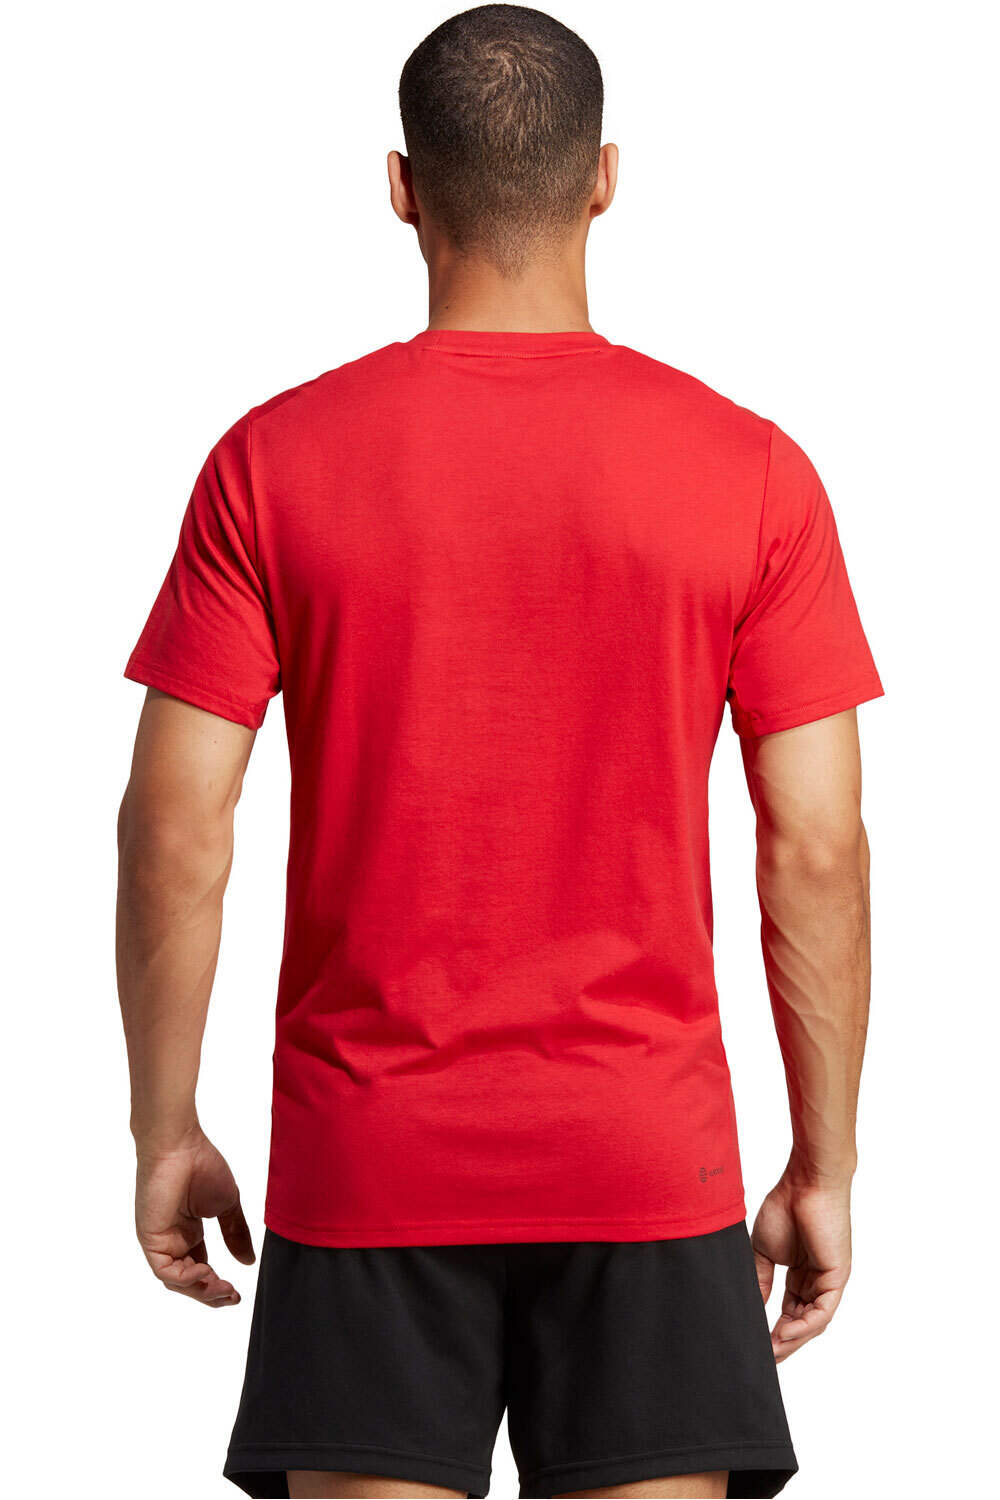 adidas camiseta fitness hombre TR-ES FR T vista trasera